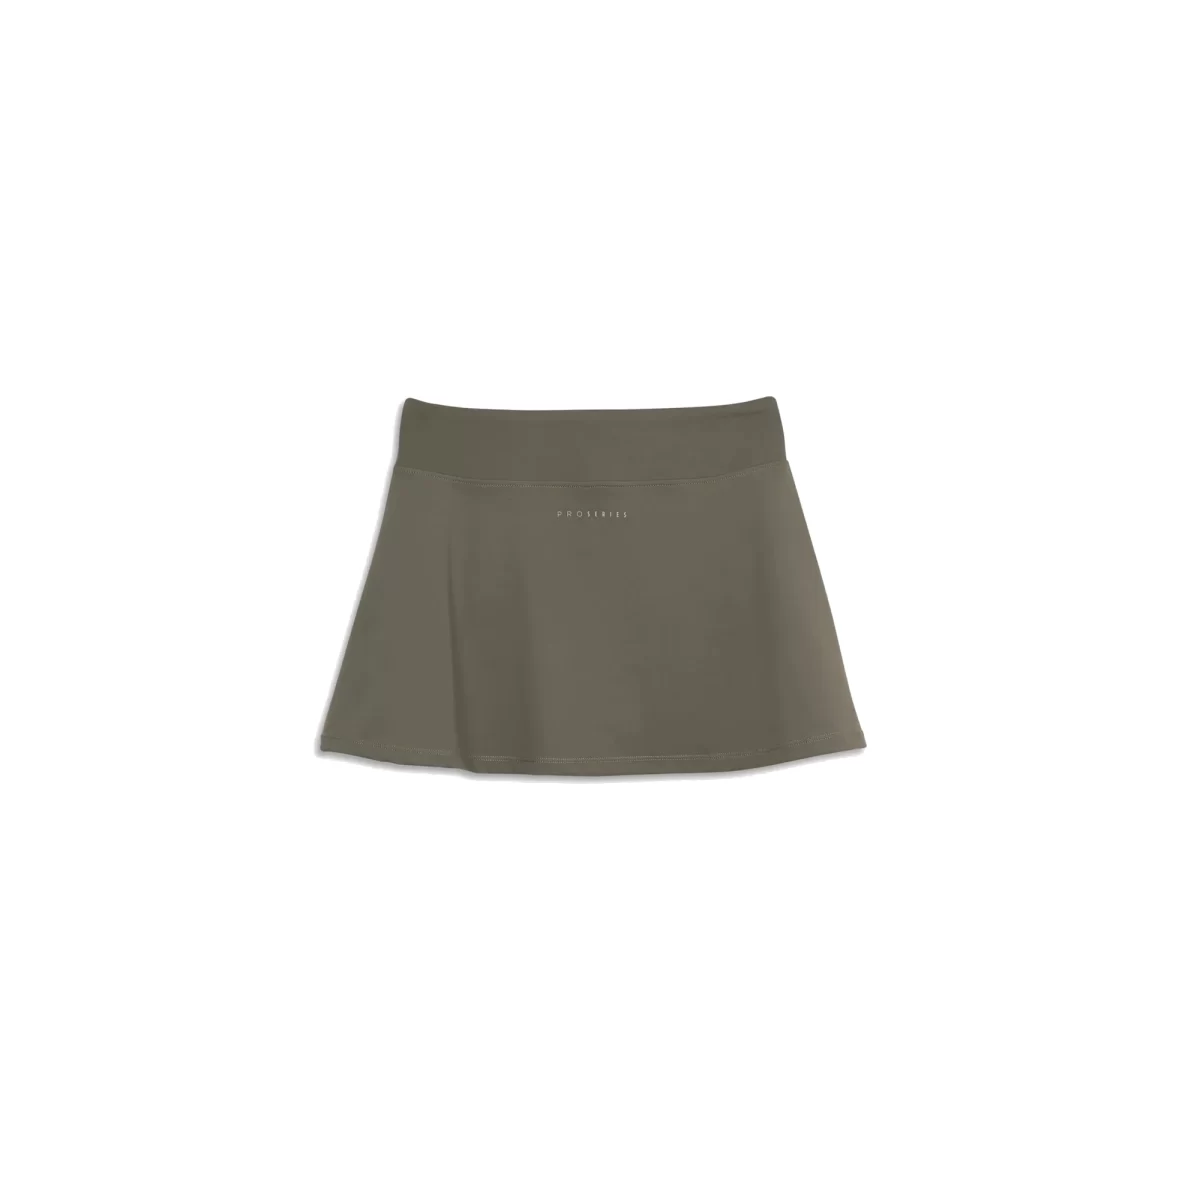 NOX Skirt Pro Olive Green